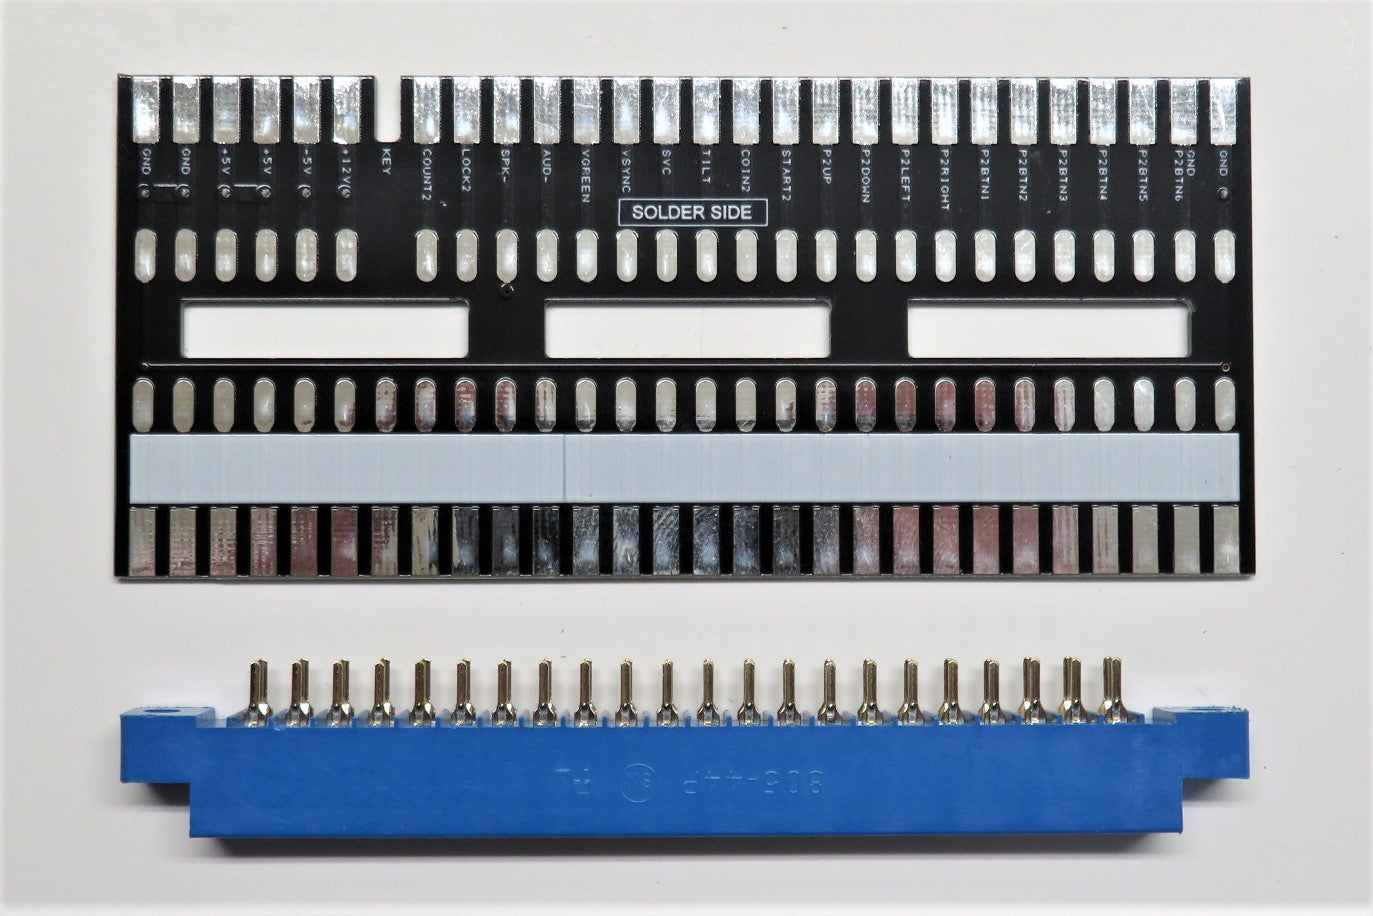 DIY / Wired - 44 pin Universal JAMMA Adapter Kit